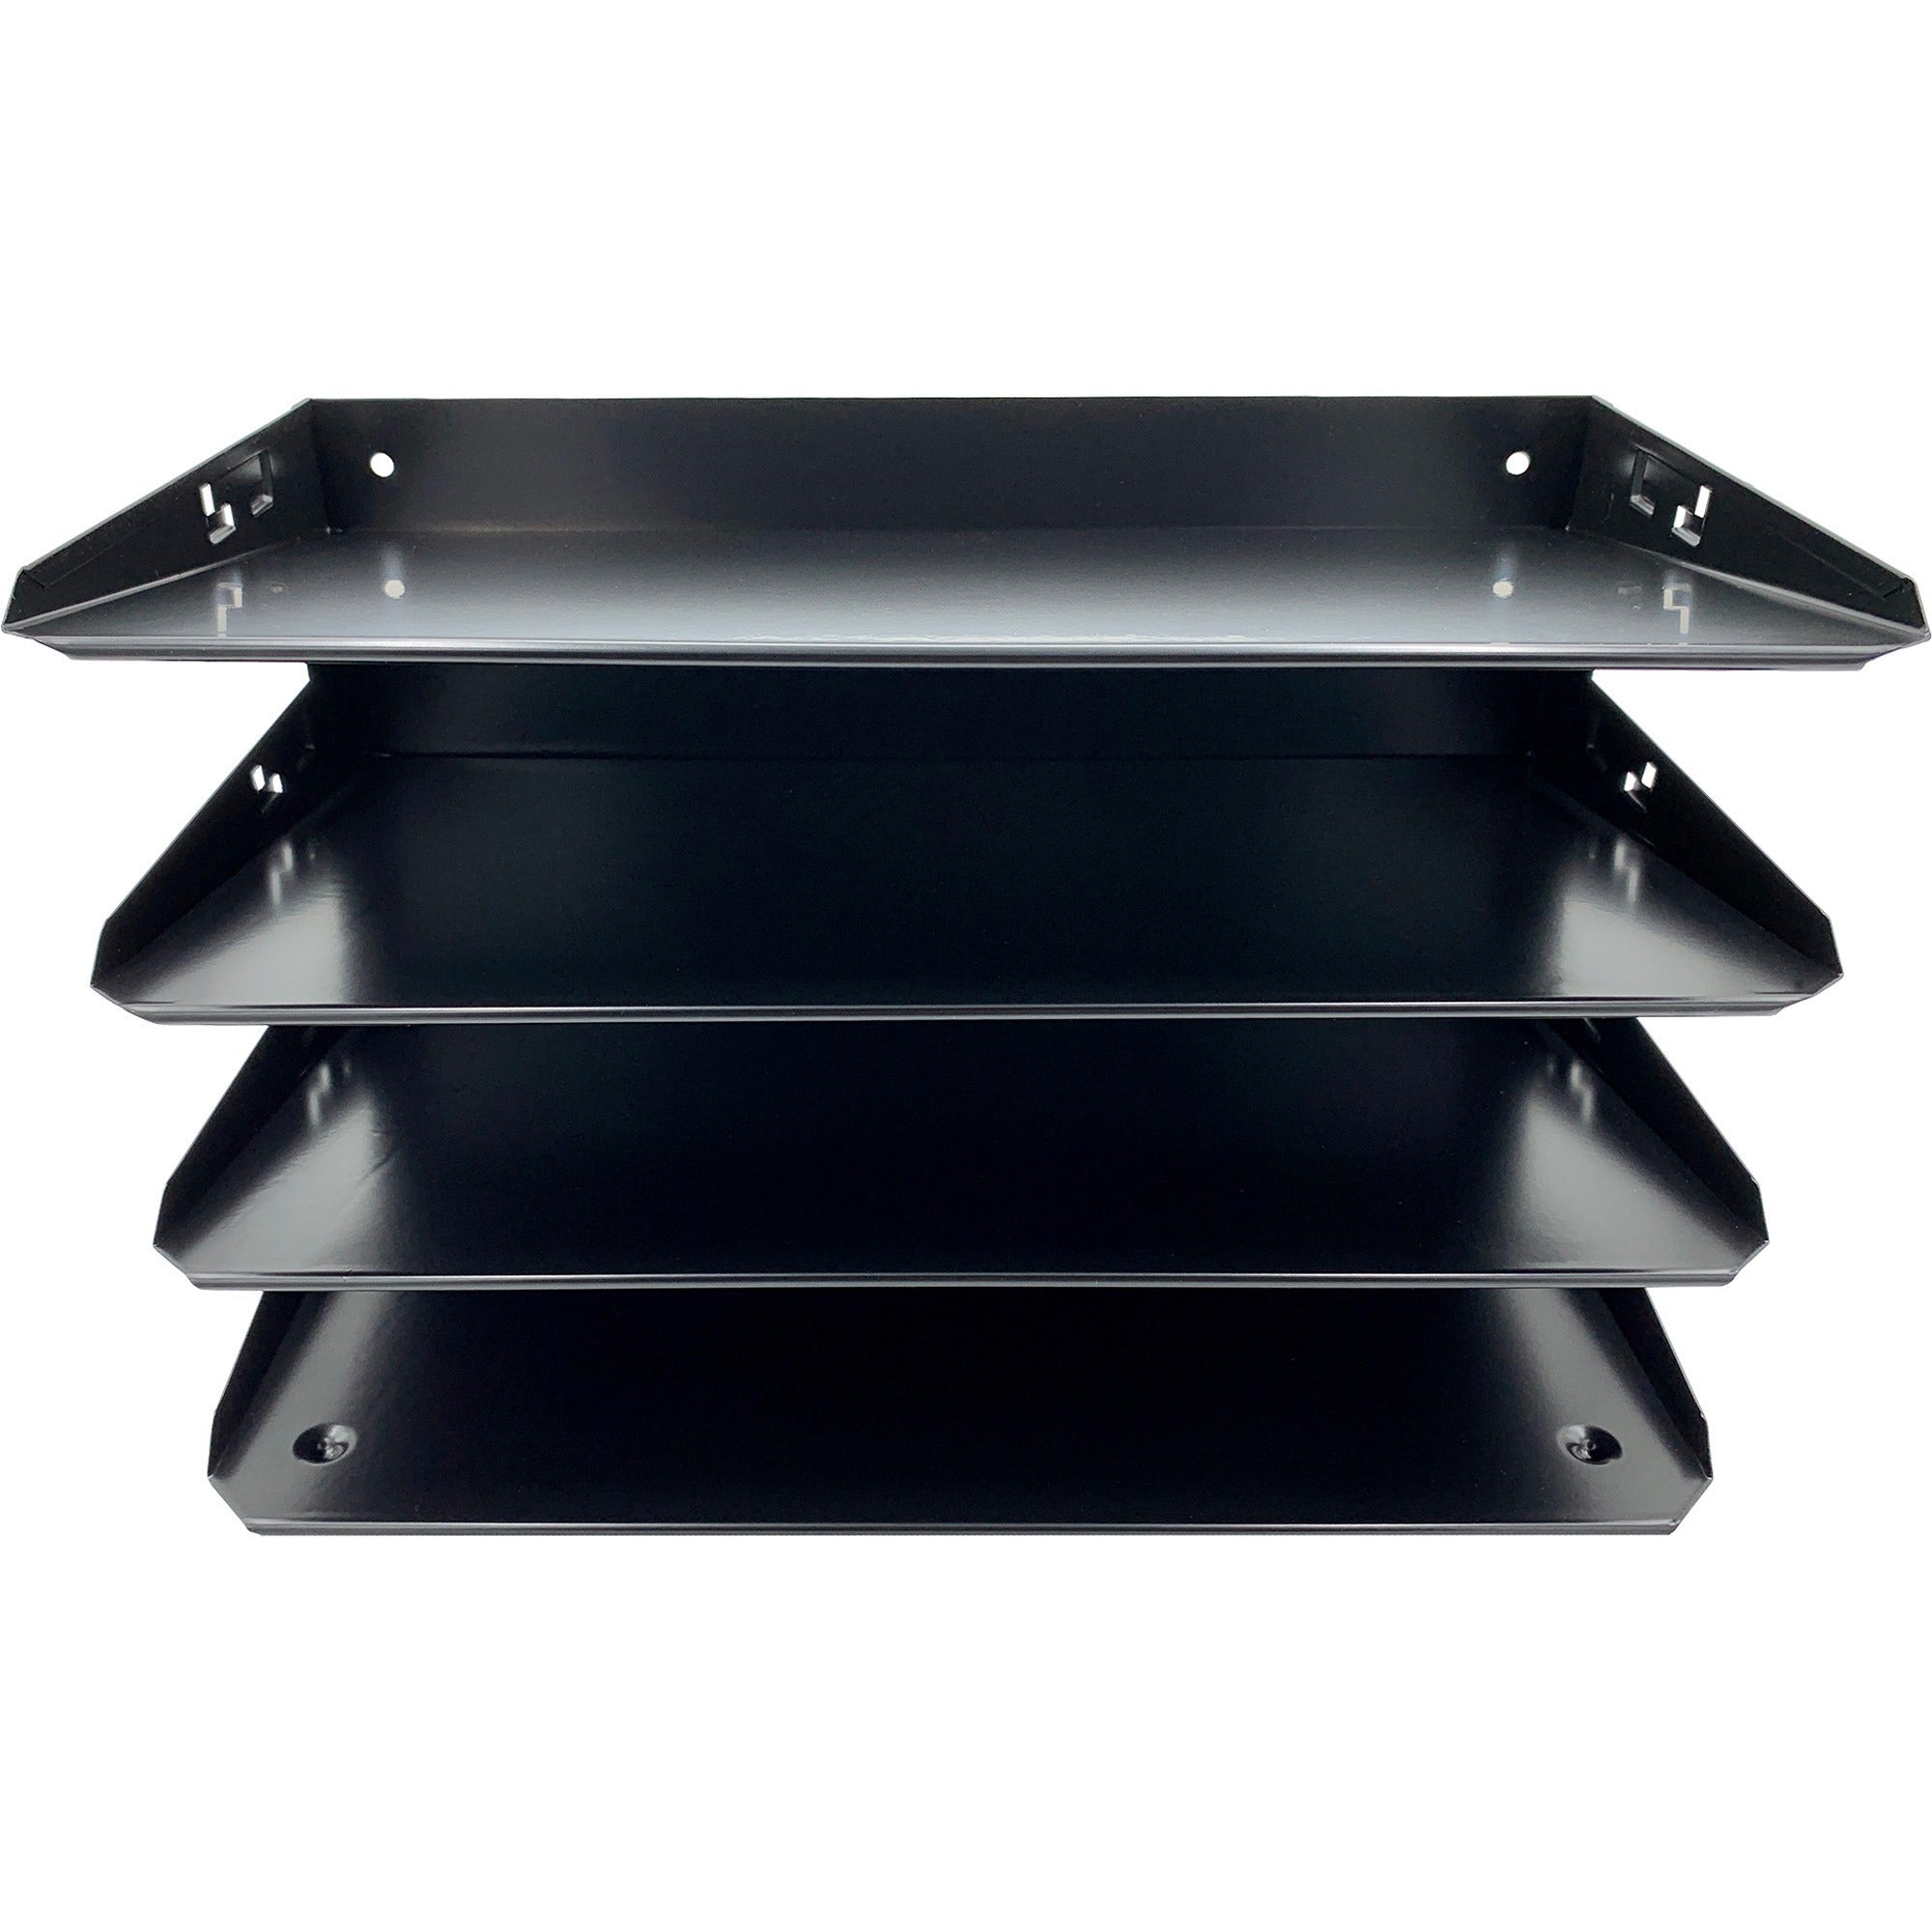 huron-horizontal-slots-desk-organizer-4-compartments-horizontal-15-height-x-93-width-x-86-depth-durable-black-steel-1-each_hurhasz0151 - 2